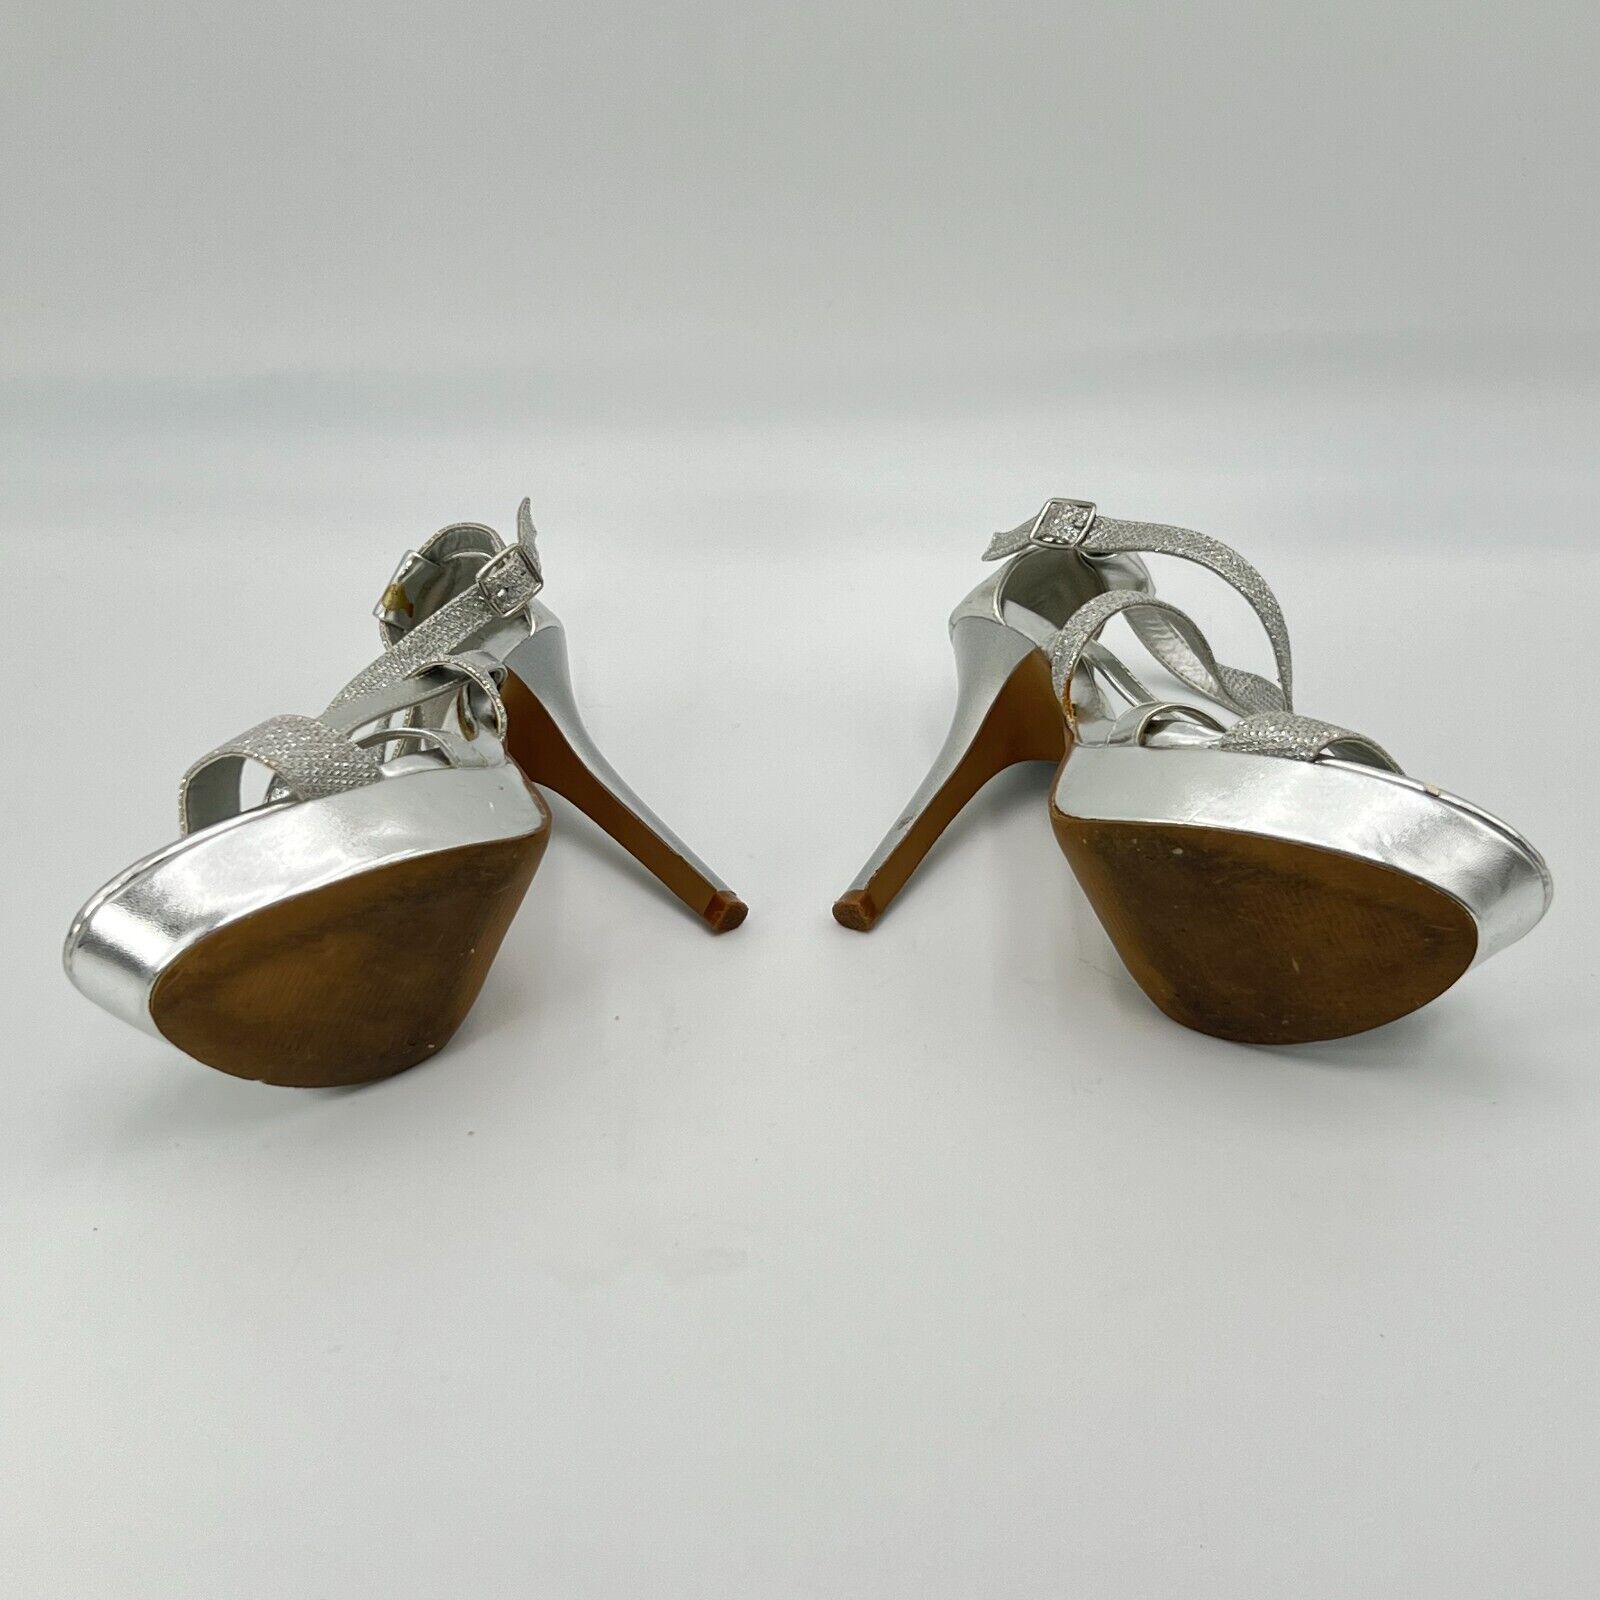 DEB 5 Inch Heels Platform Sandle Silver with Jewels Adjustable Buckle Womens Siz